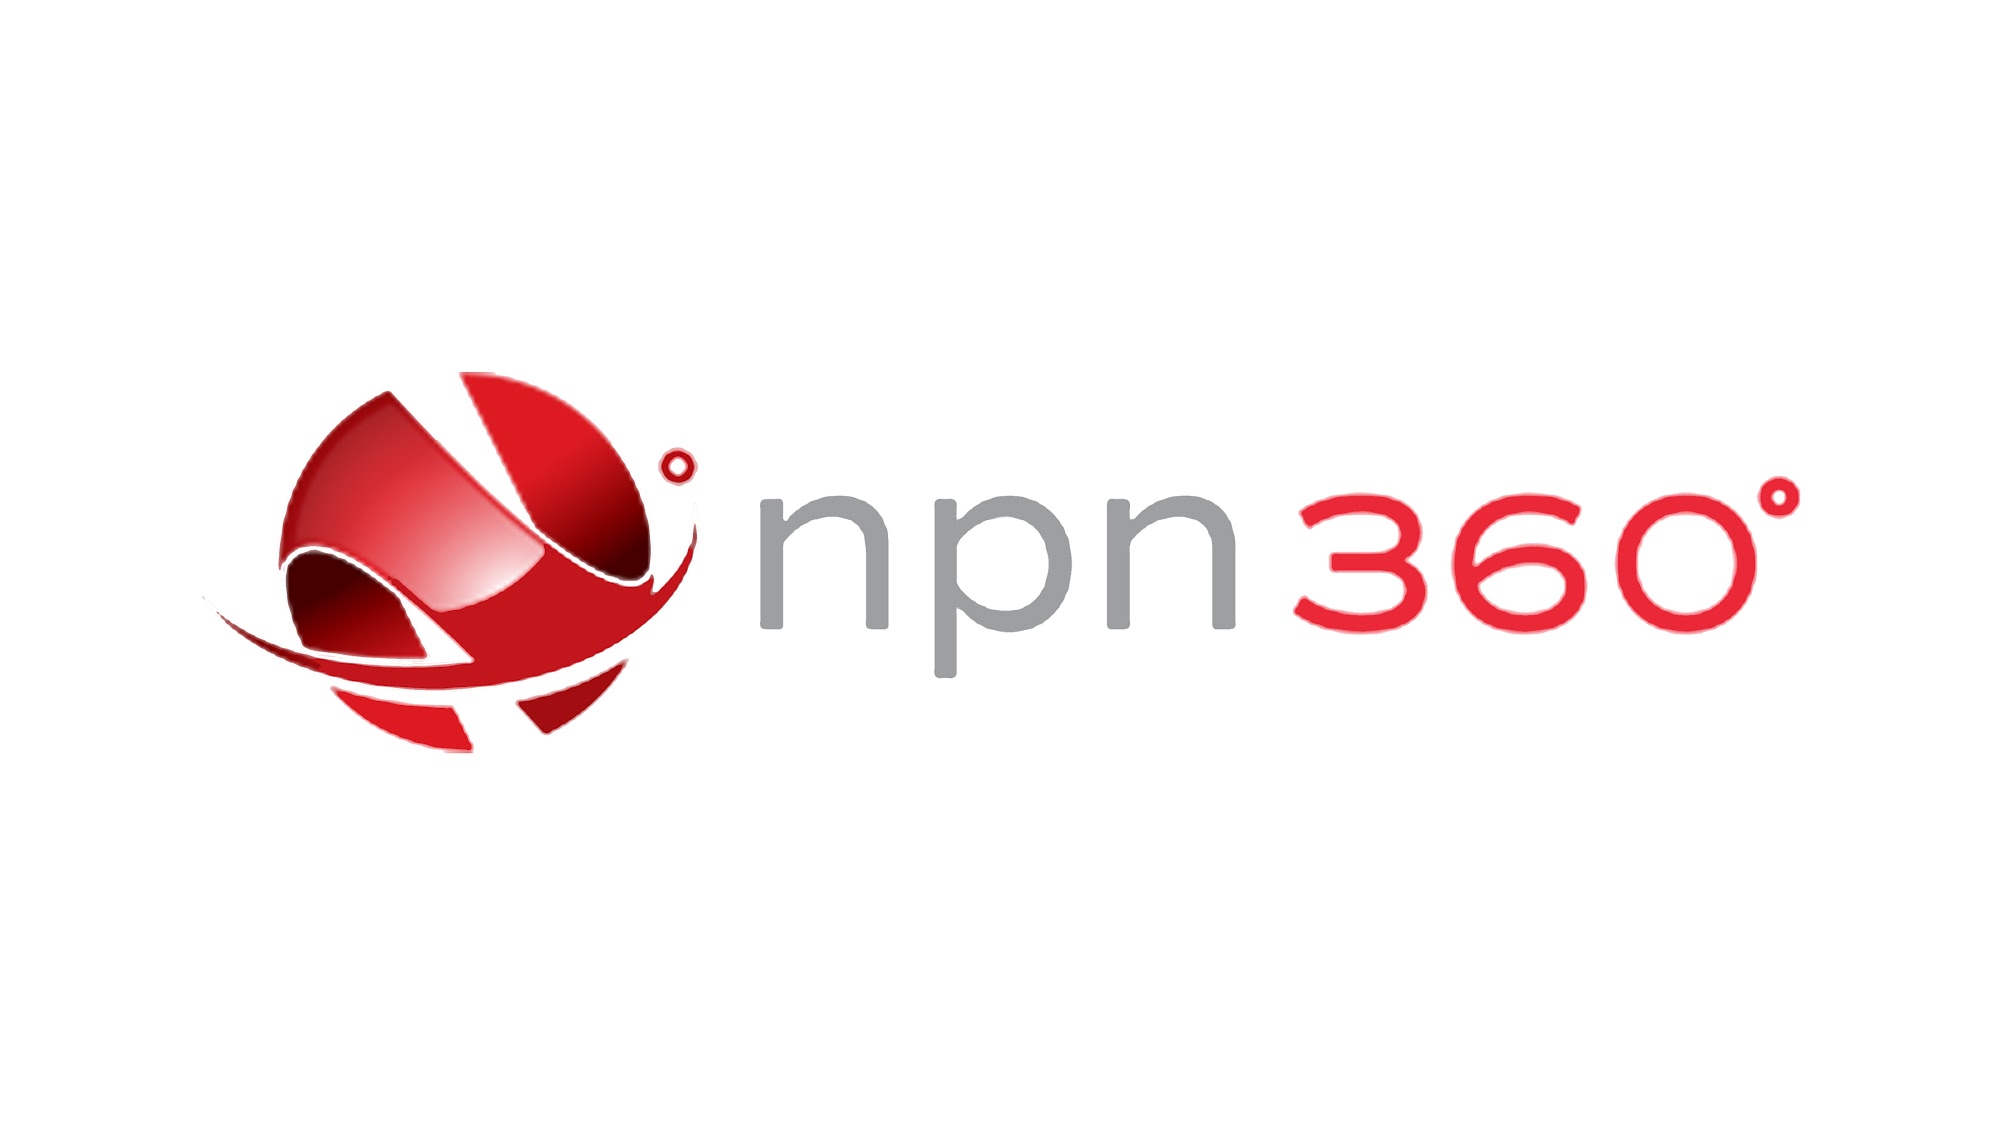 NPN360 Inc